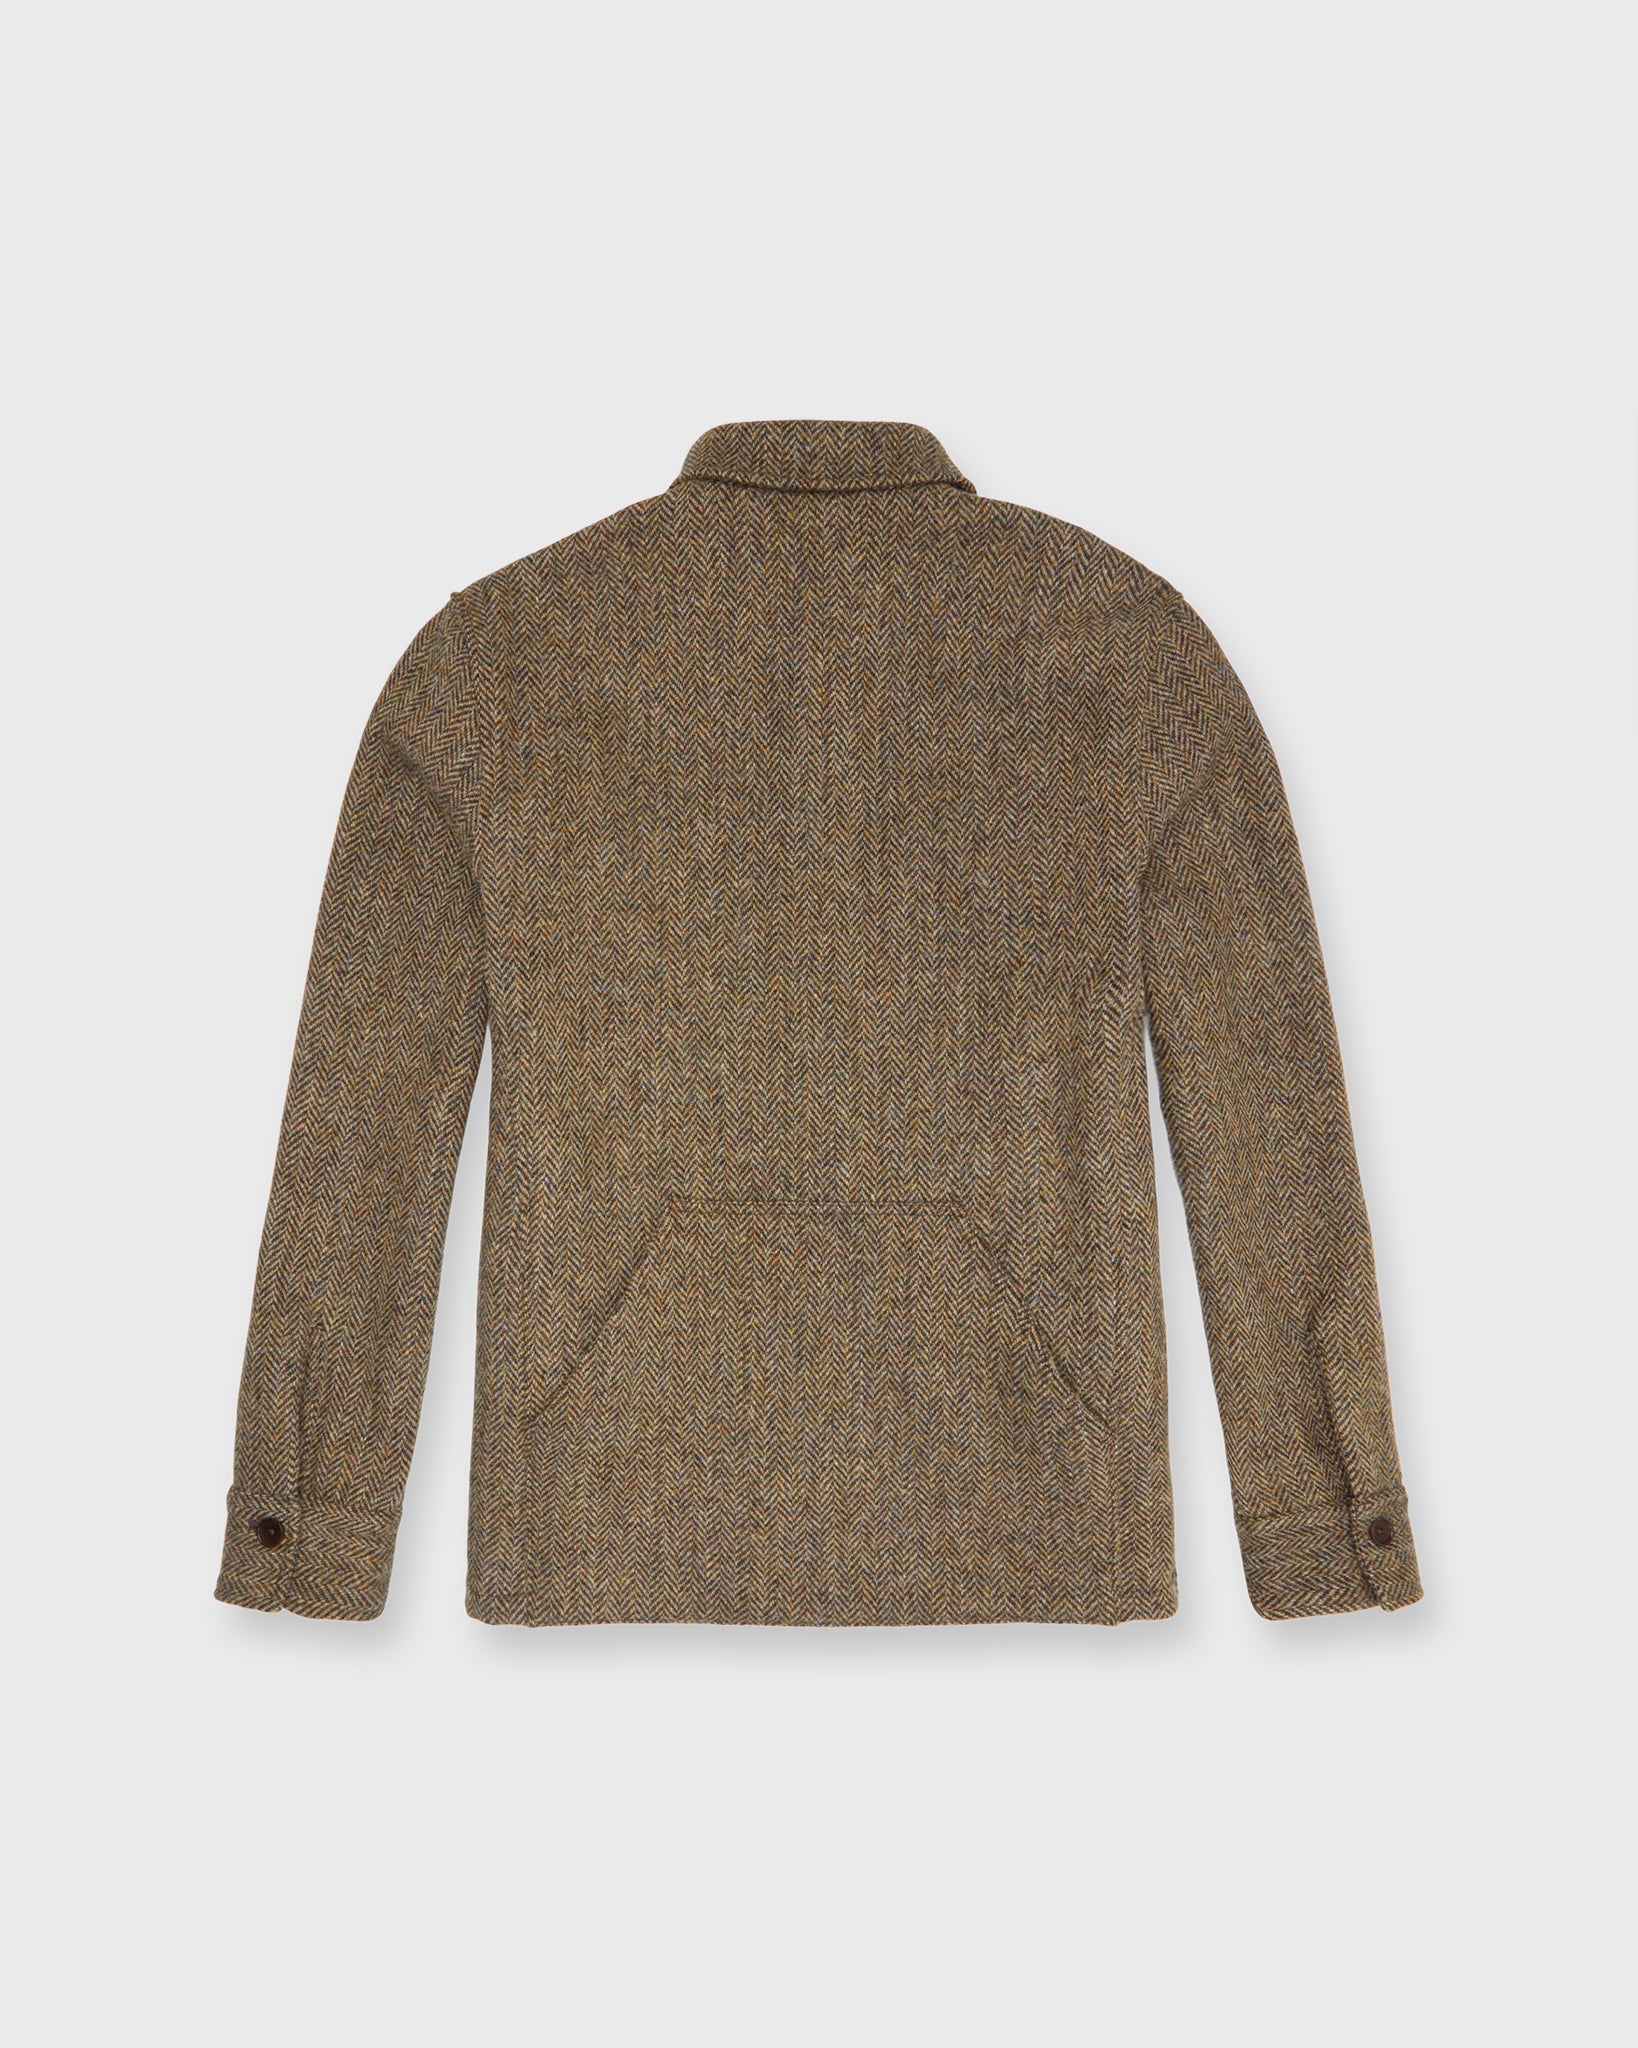 Military Jacket in Wheat/Chocolate Herringbone Harris Tweed | Shop